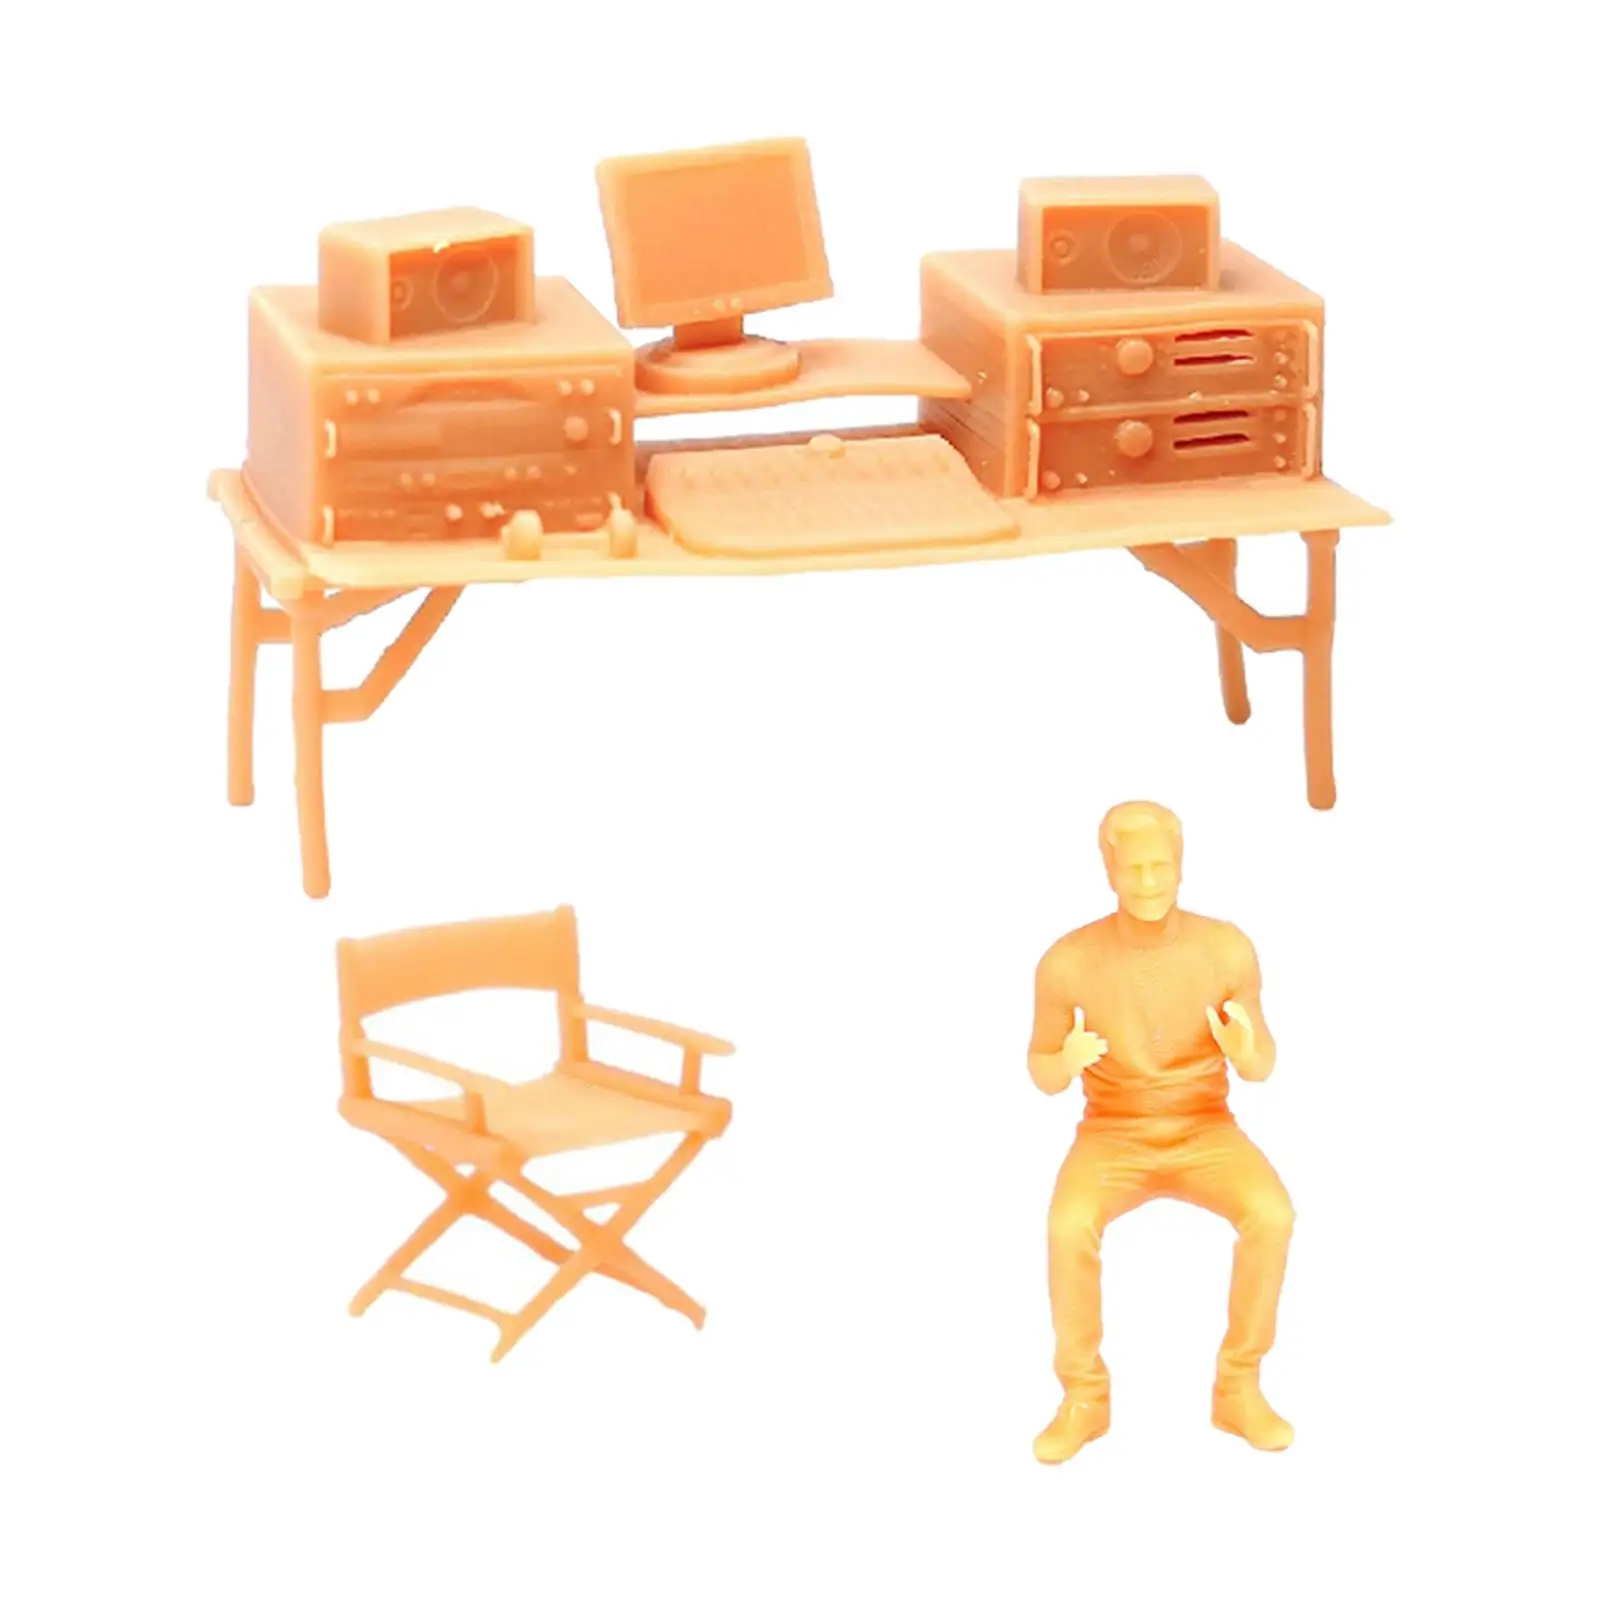 1:64 People Figurines Desk Model Mini People Model for DIY Scene Diorama Layout Decor